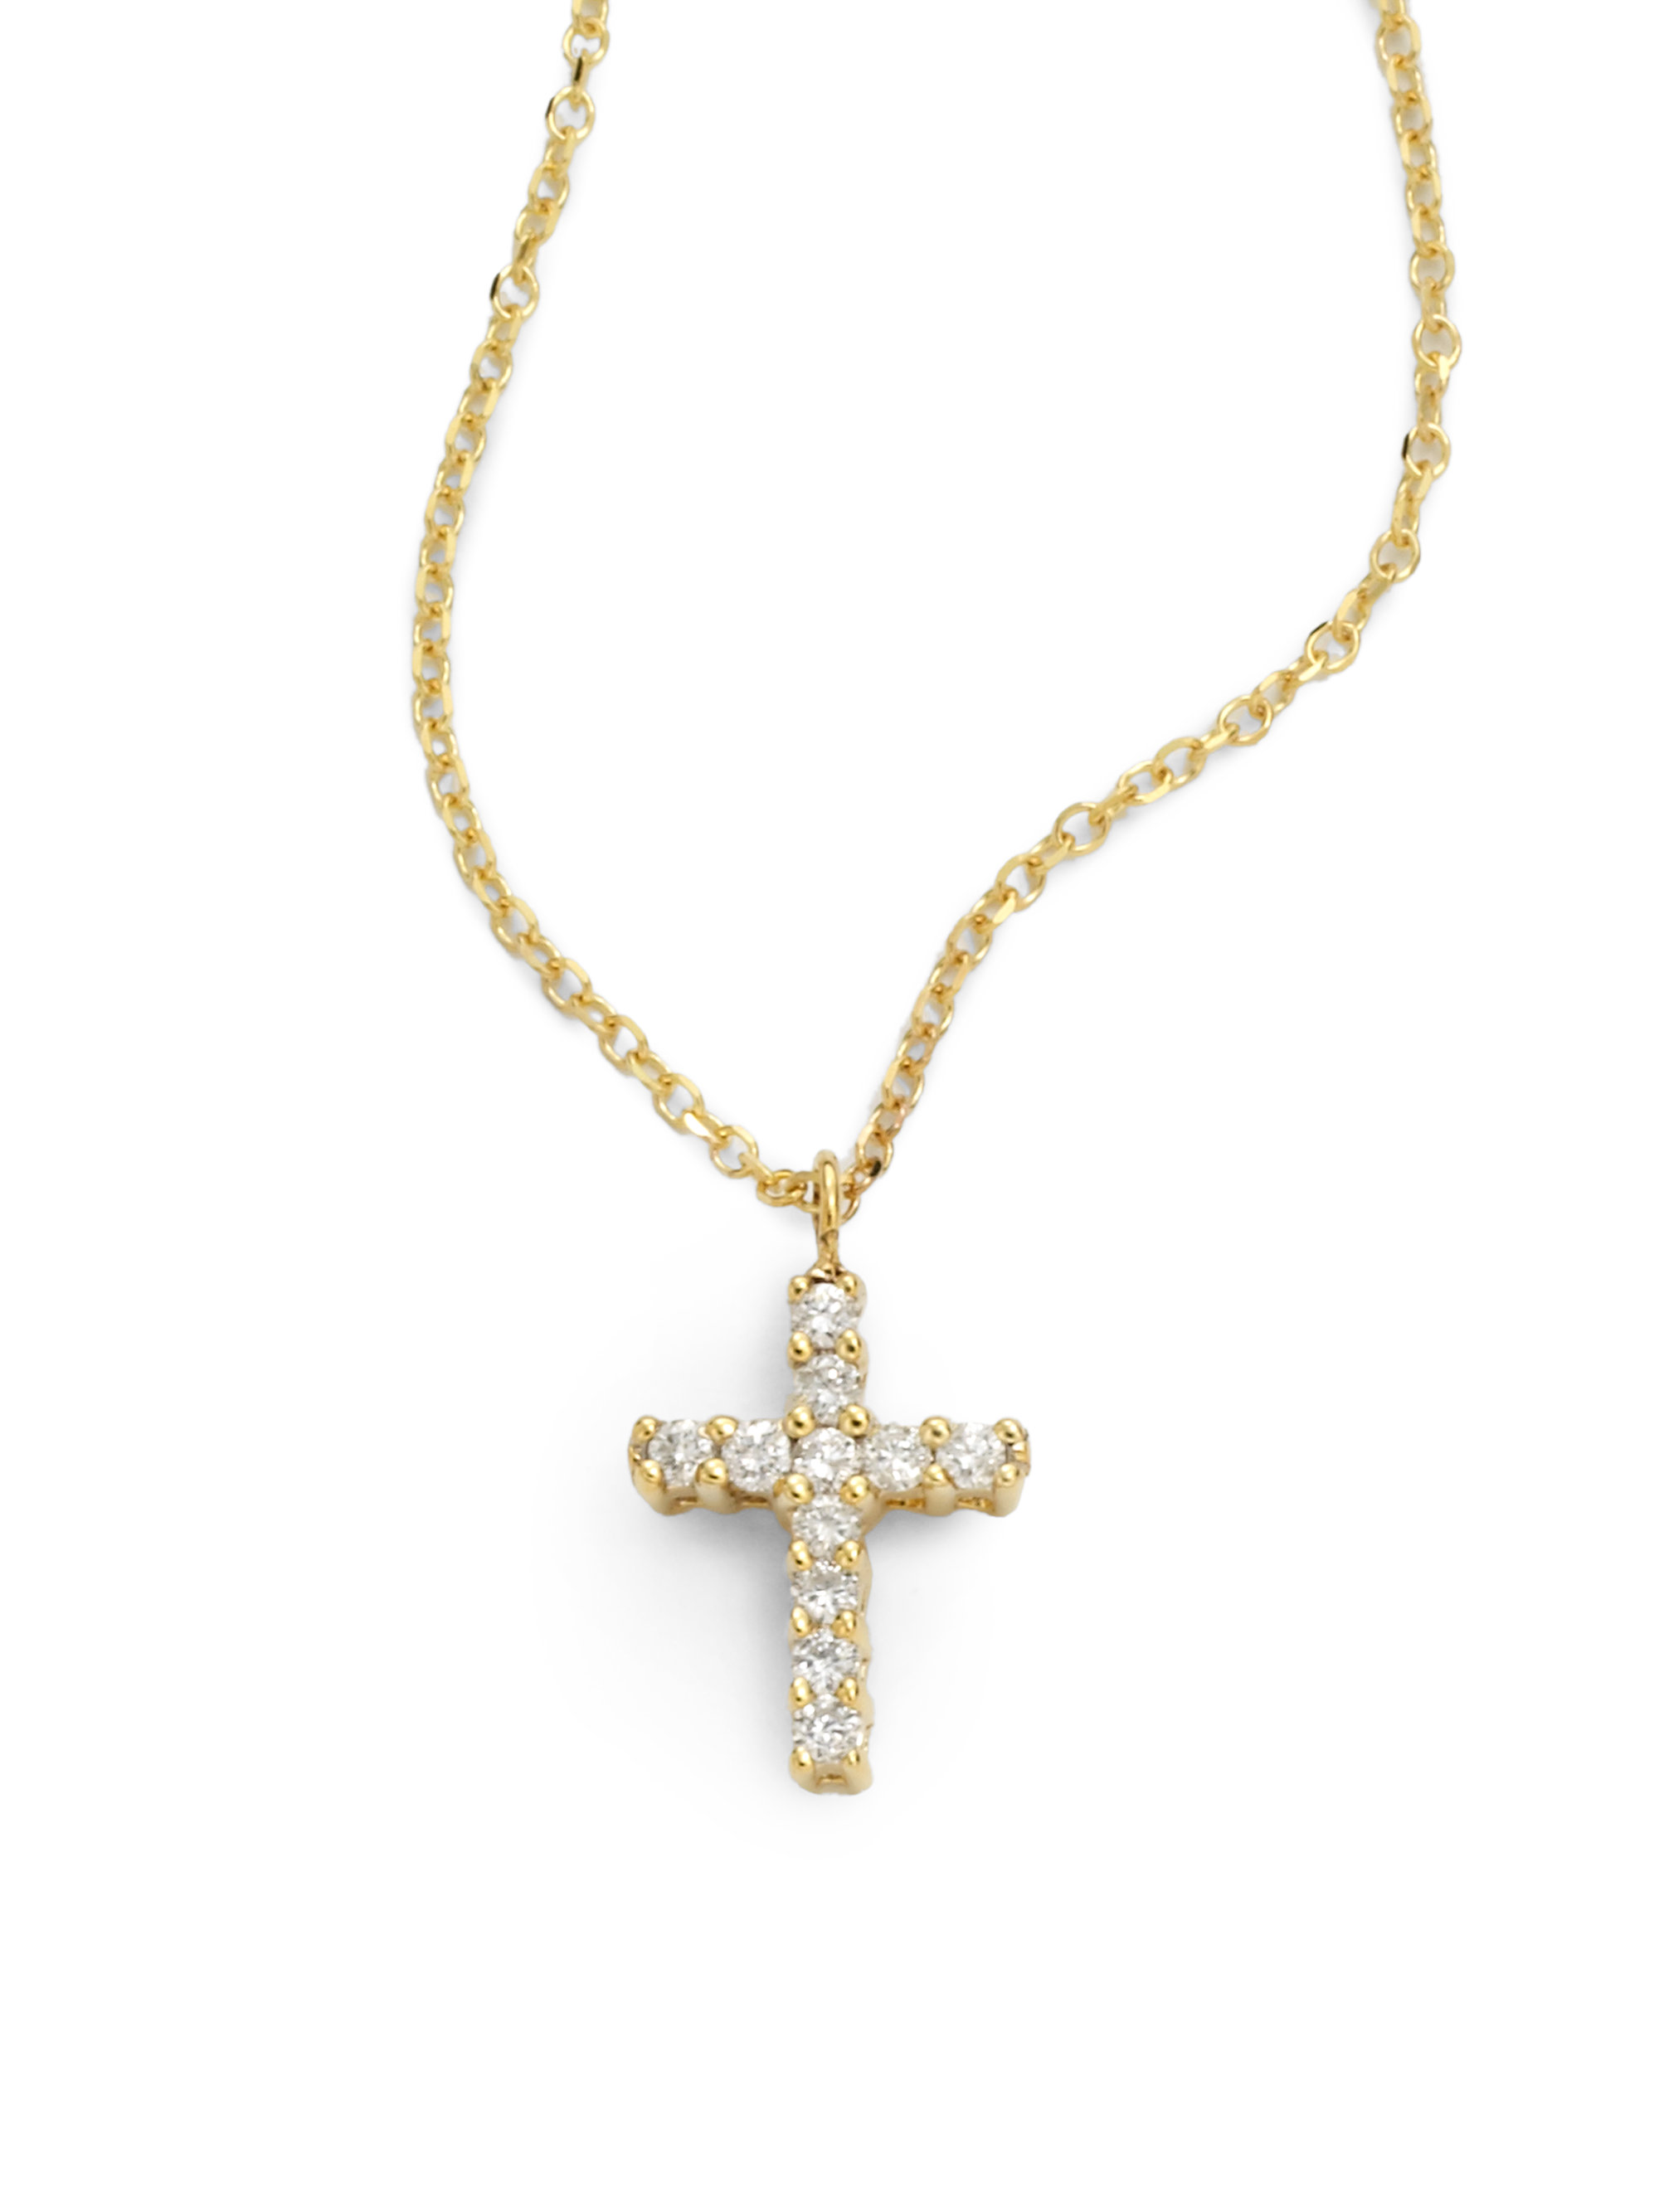 Lyst - Kc Designs Small Diamond Cross Necklace in Metallic